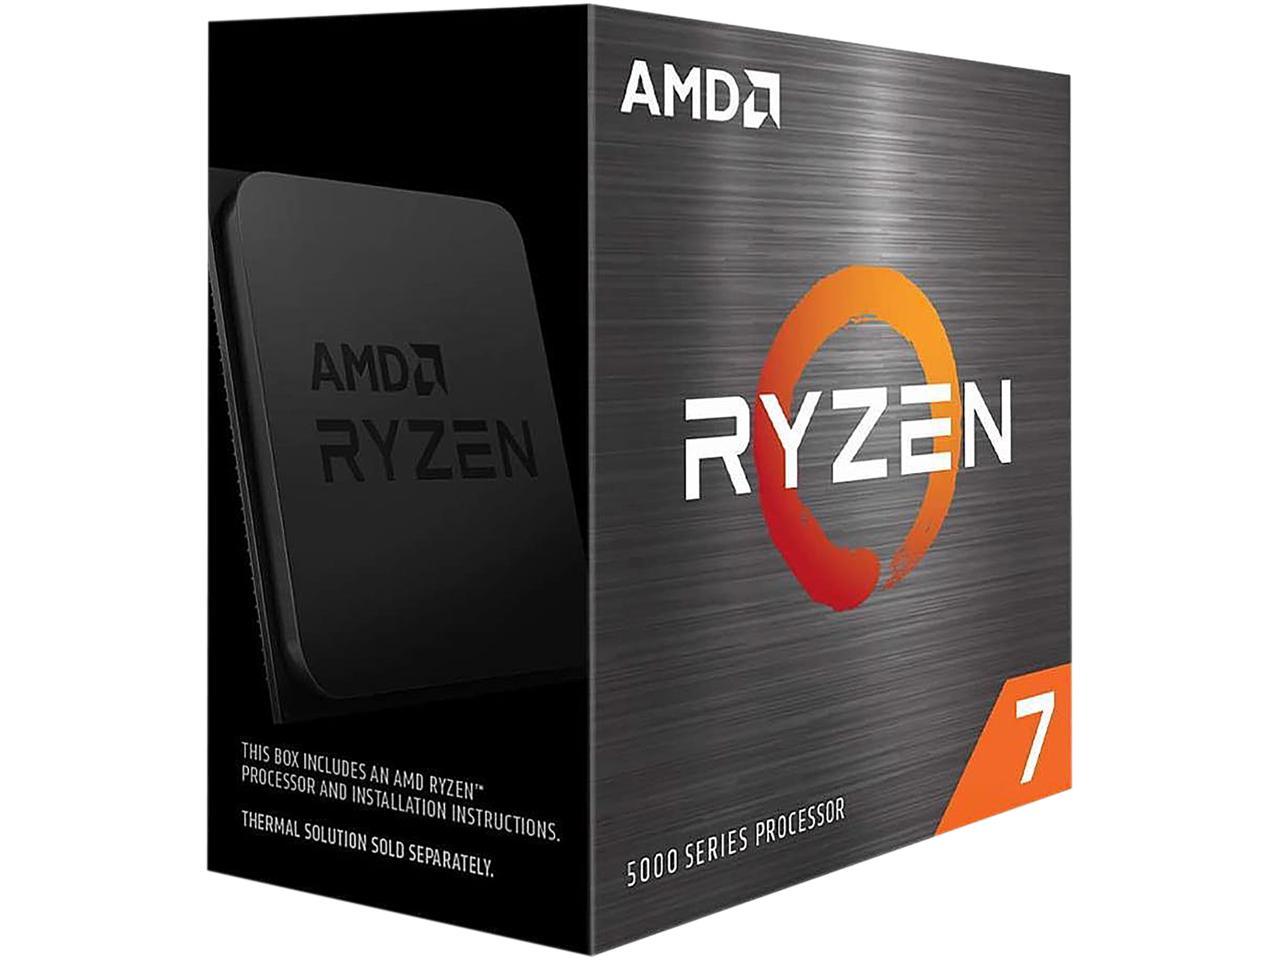 AMD Ryzen 7 5700X 3.4GHz 8-Core/16-Thread AM4 CPU - $178.99 + Free Shipping